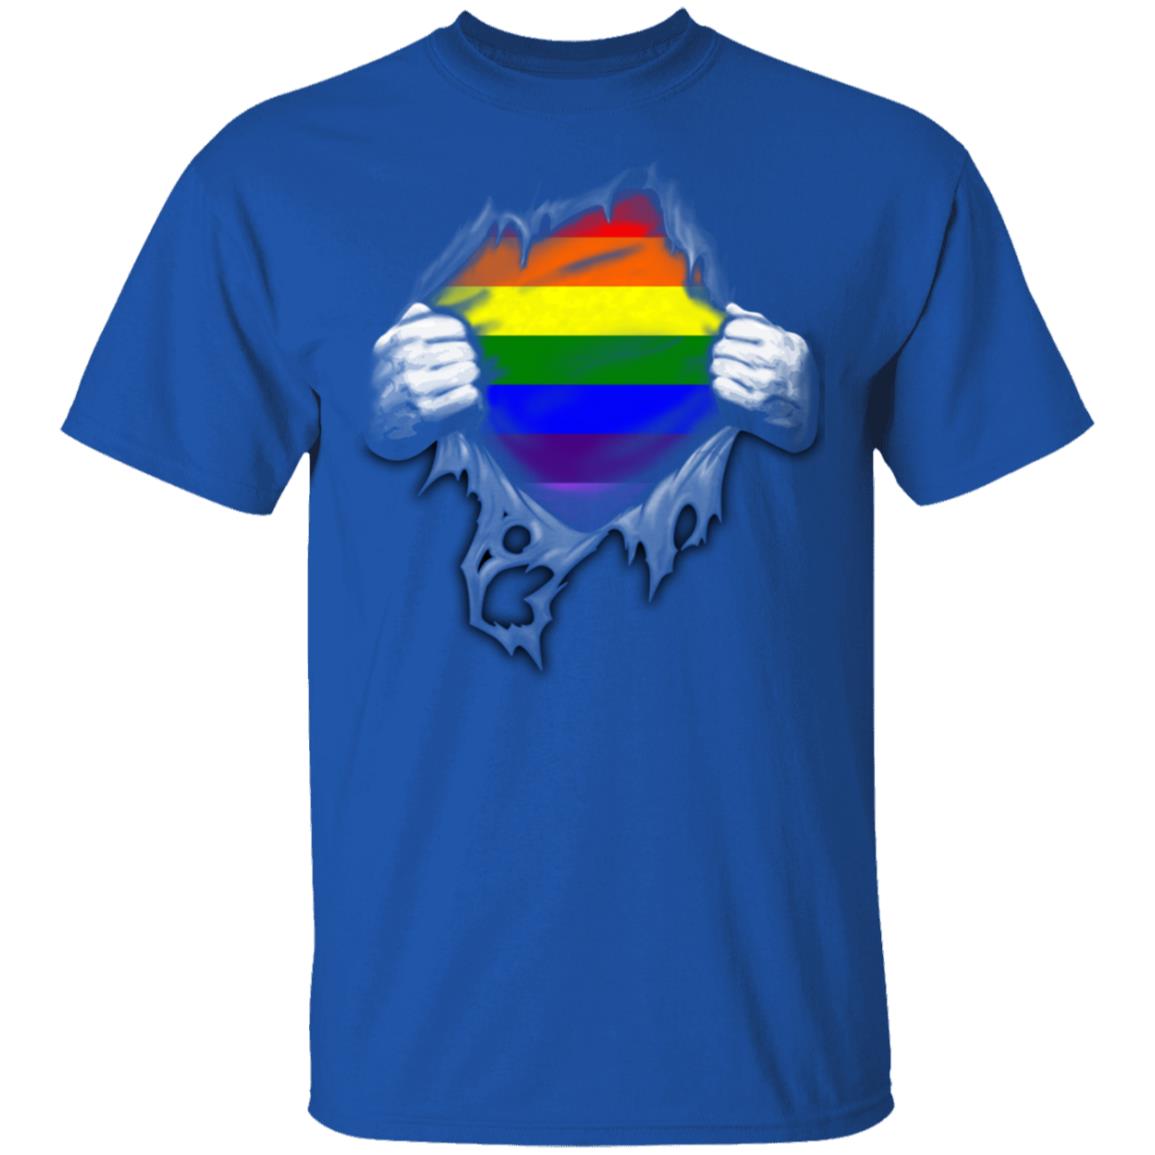 gay pride apparel saint louis